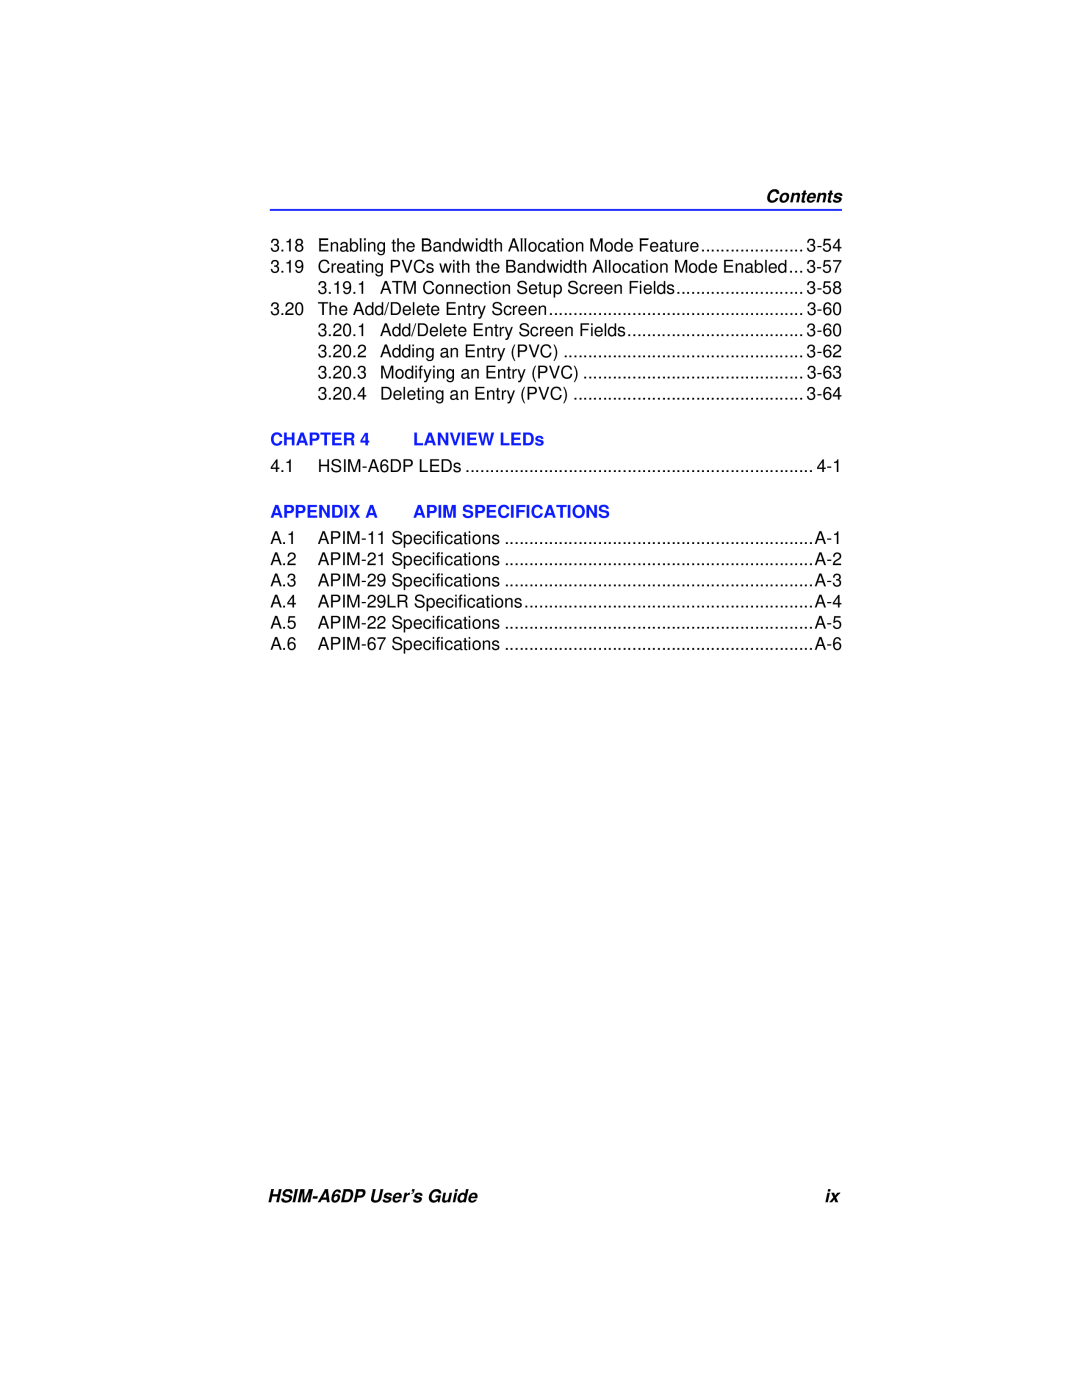 Cabletron Systems manual Contents, Chapter, LANVIEW LEDs, Appendix A, Apim Specifications, HSIM-A6DP User’s Guide 